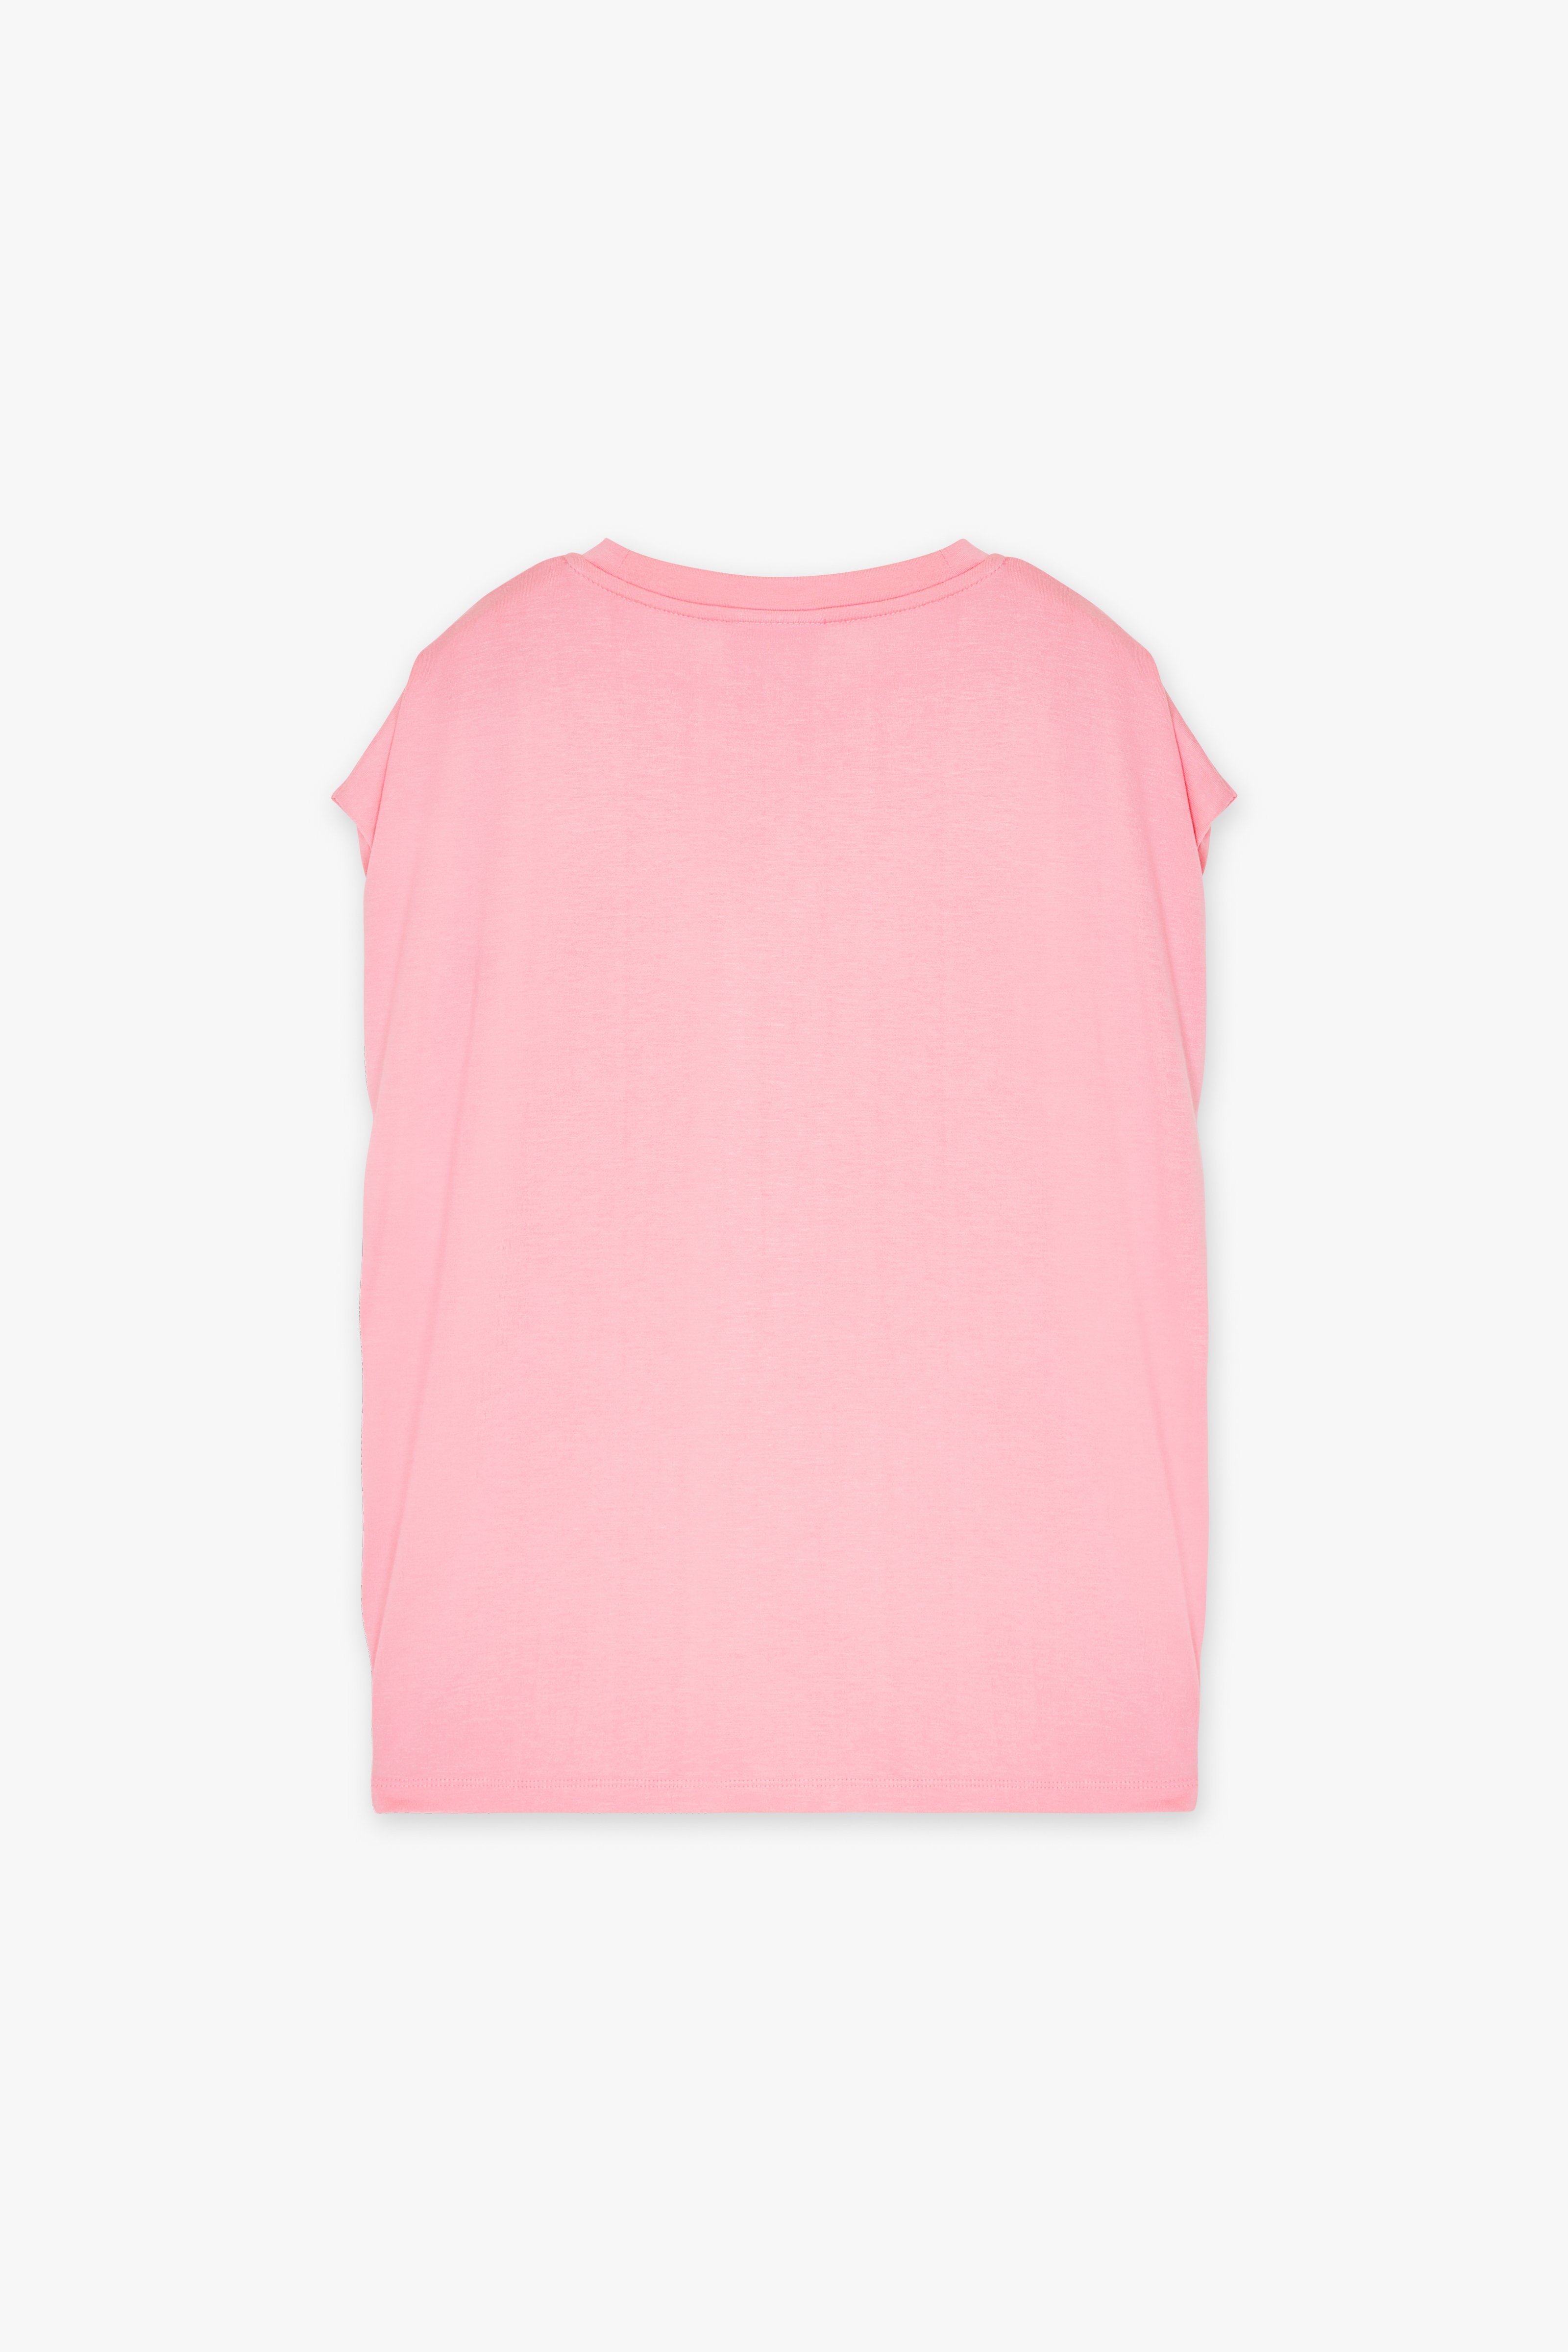 CKS Dames - PLAMINA - t-shirt short sleeves - light pink